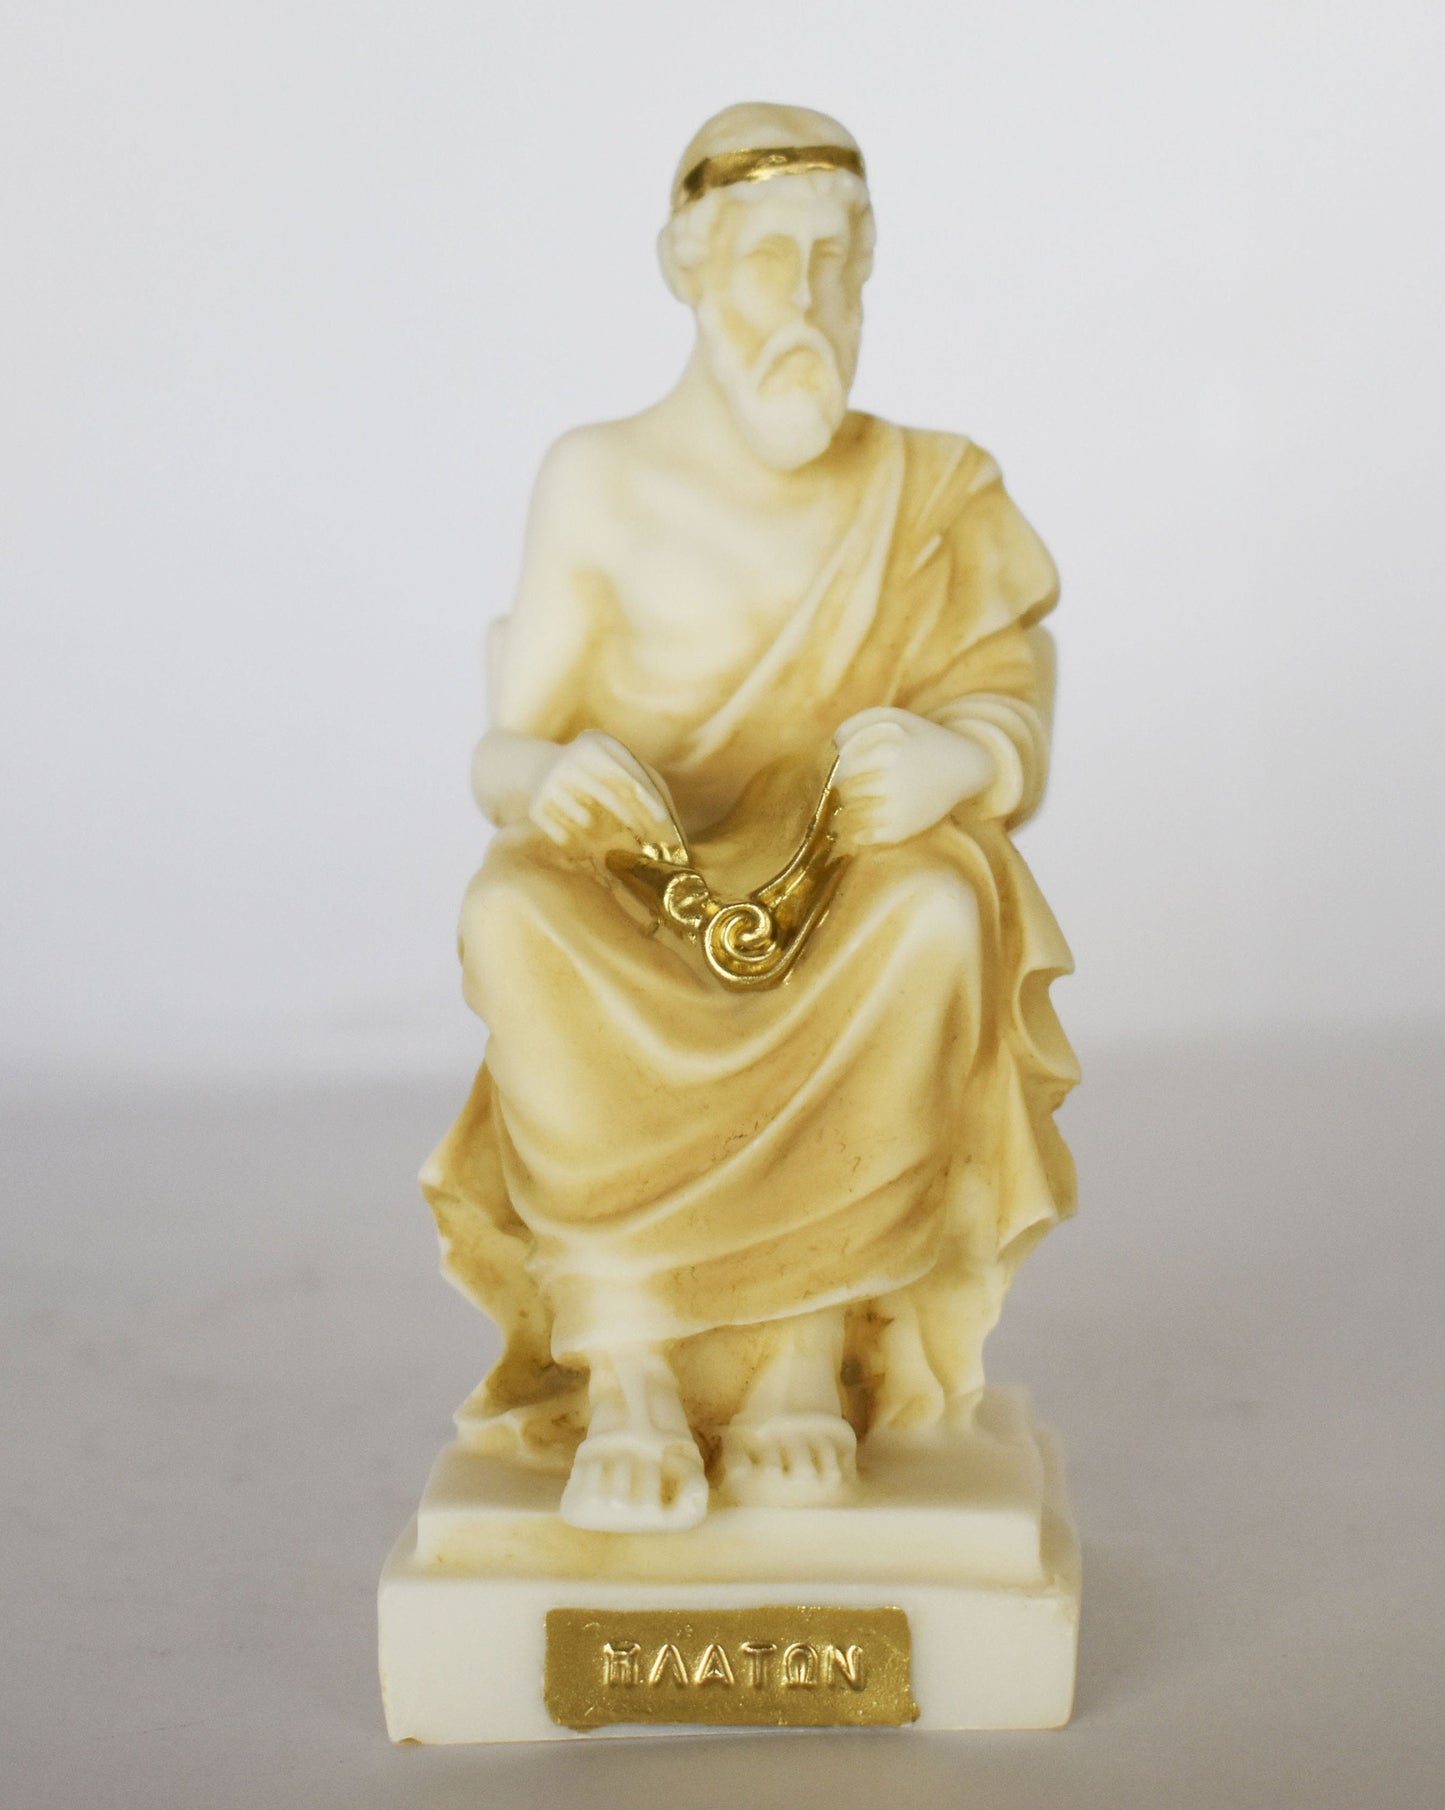 Plato - Ancient Greek Philosopher, Student of Socrates, Teacher of Aristotle - Alabaster Sculpture